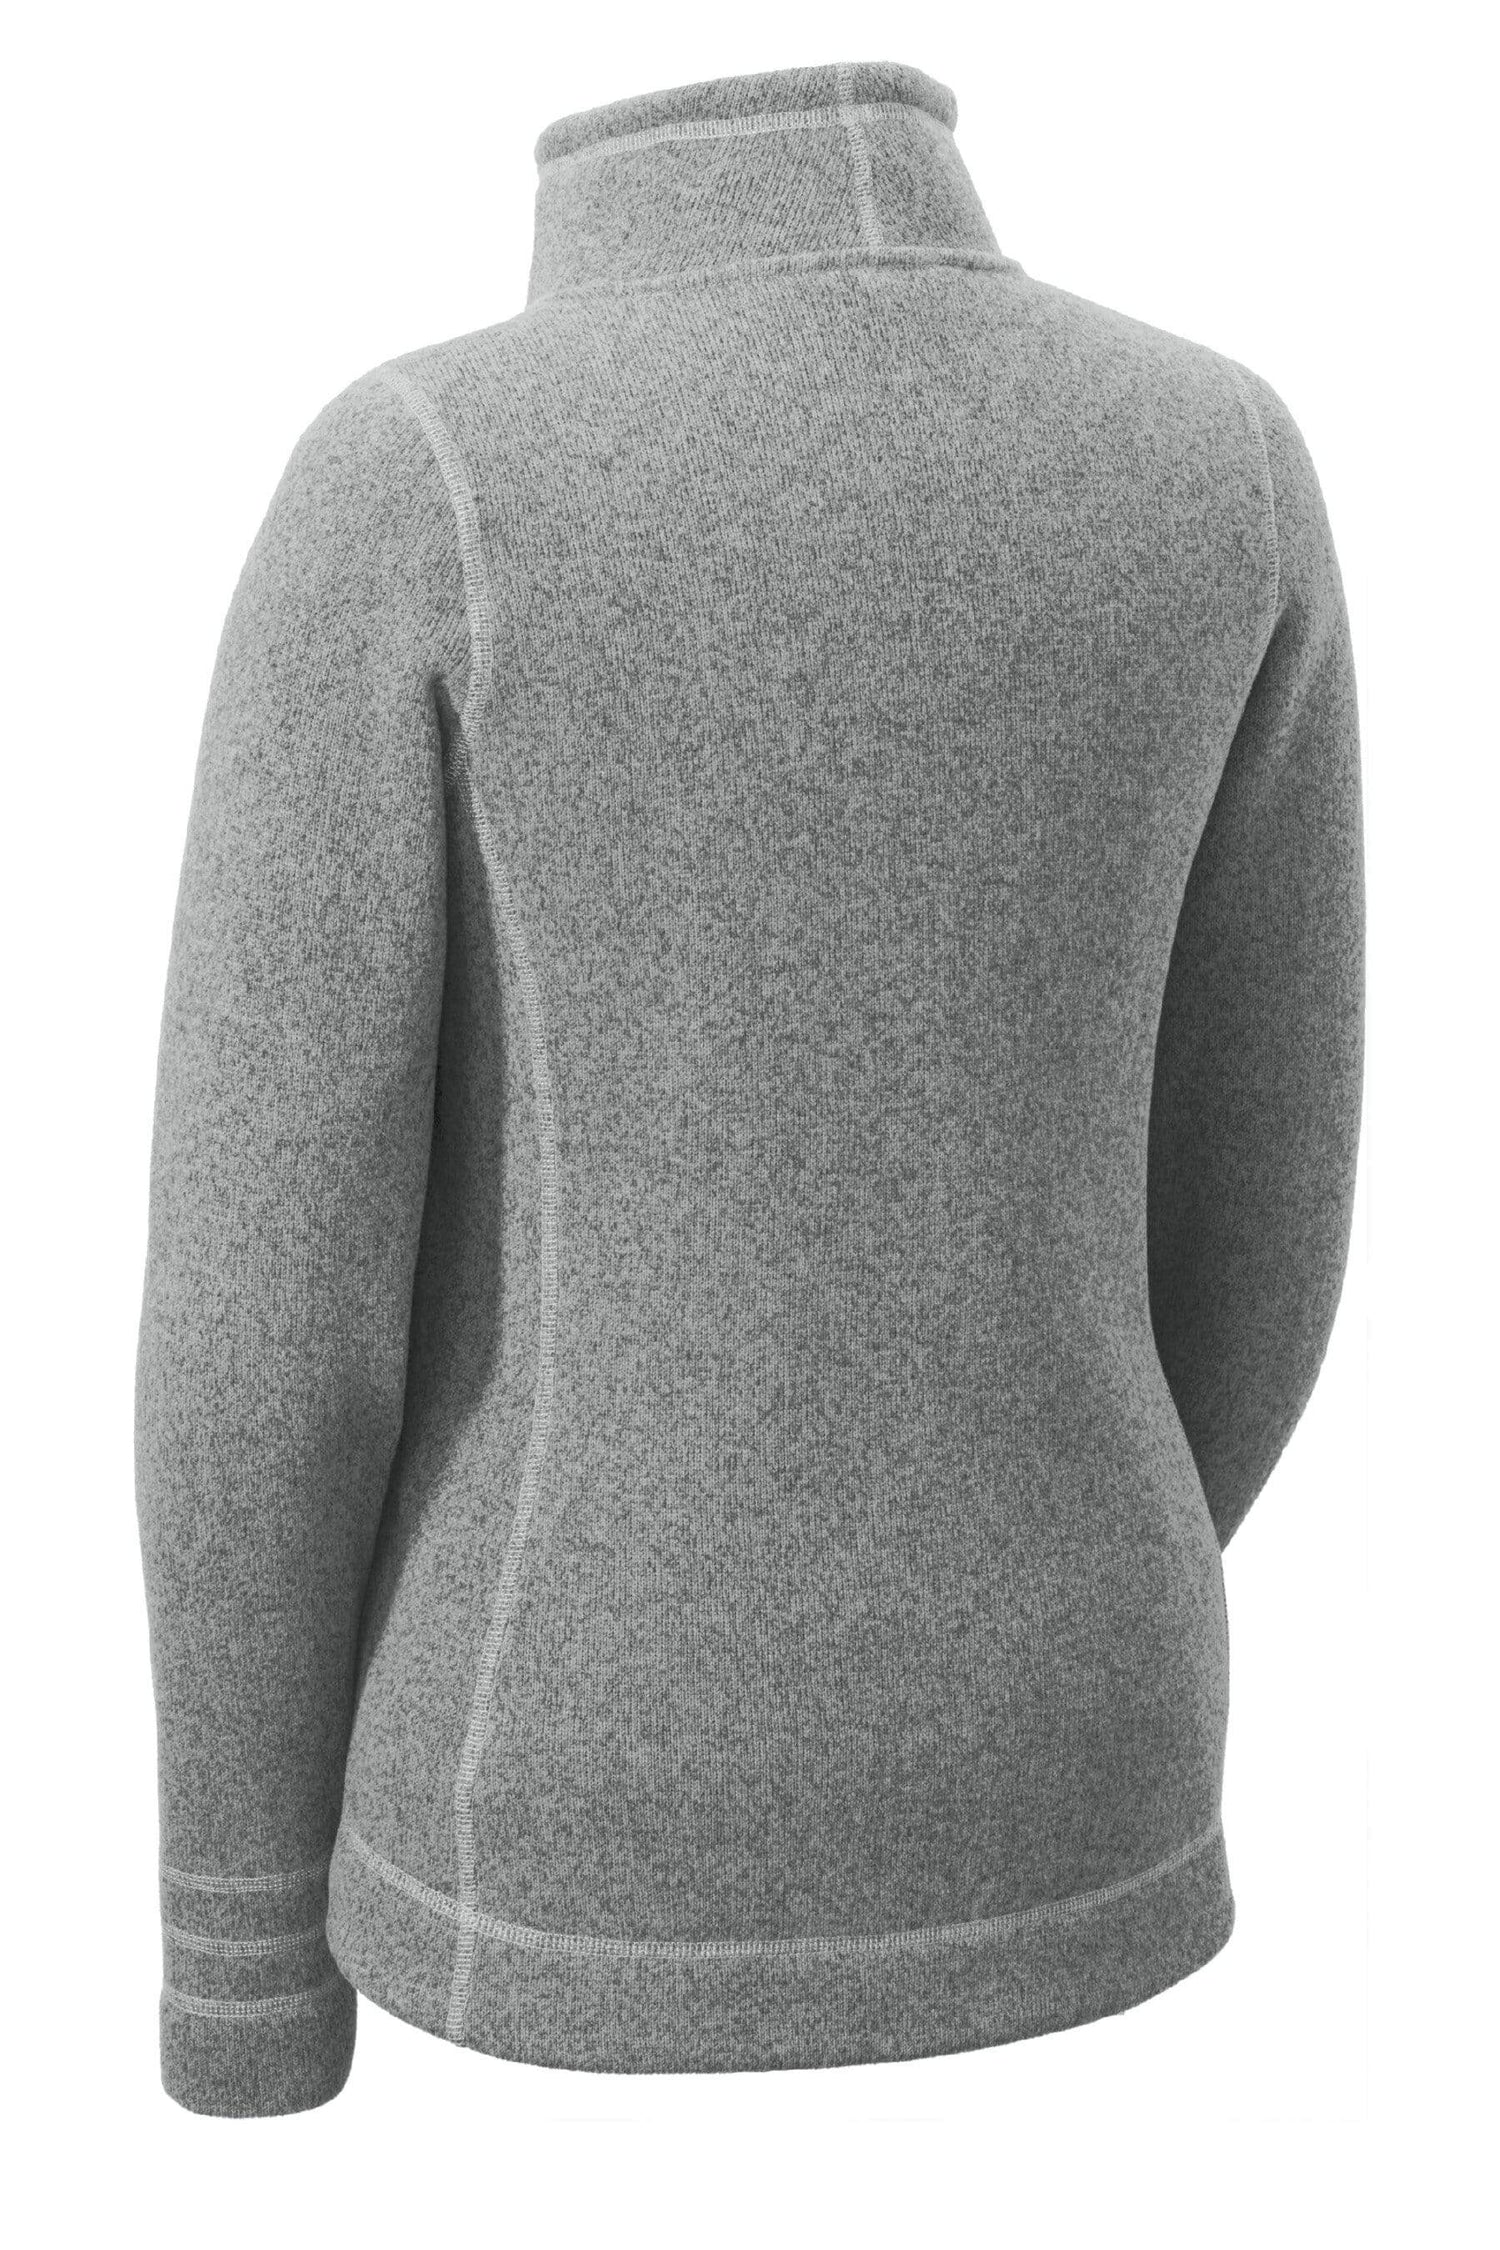 North Face Sweater Fleece Jacket Custom